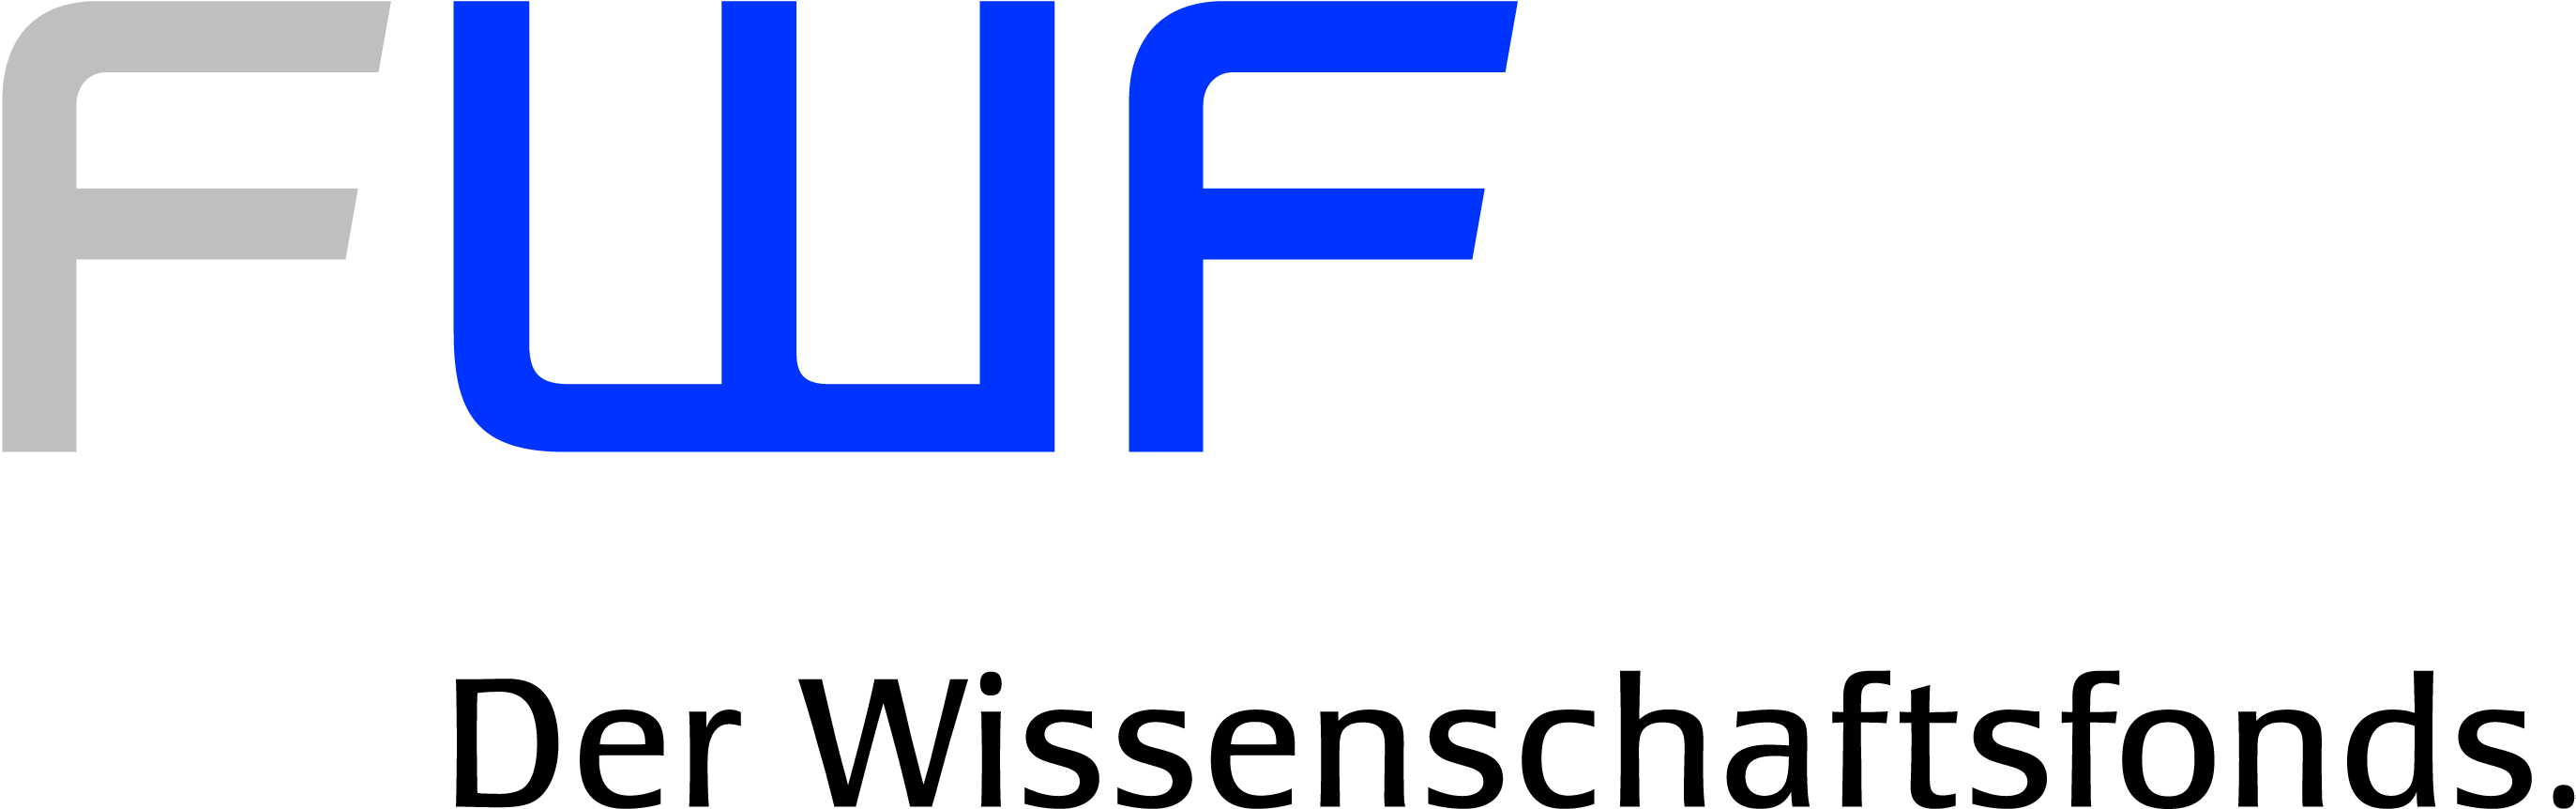 fwf logo var2